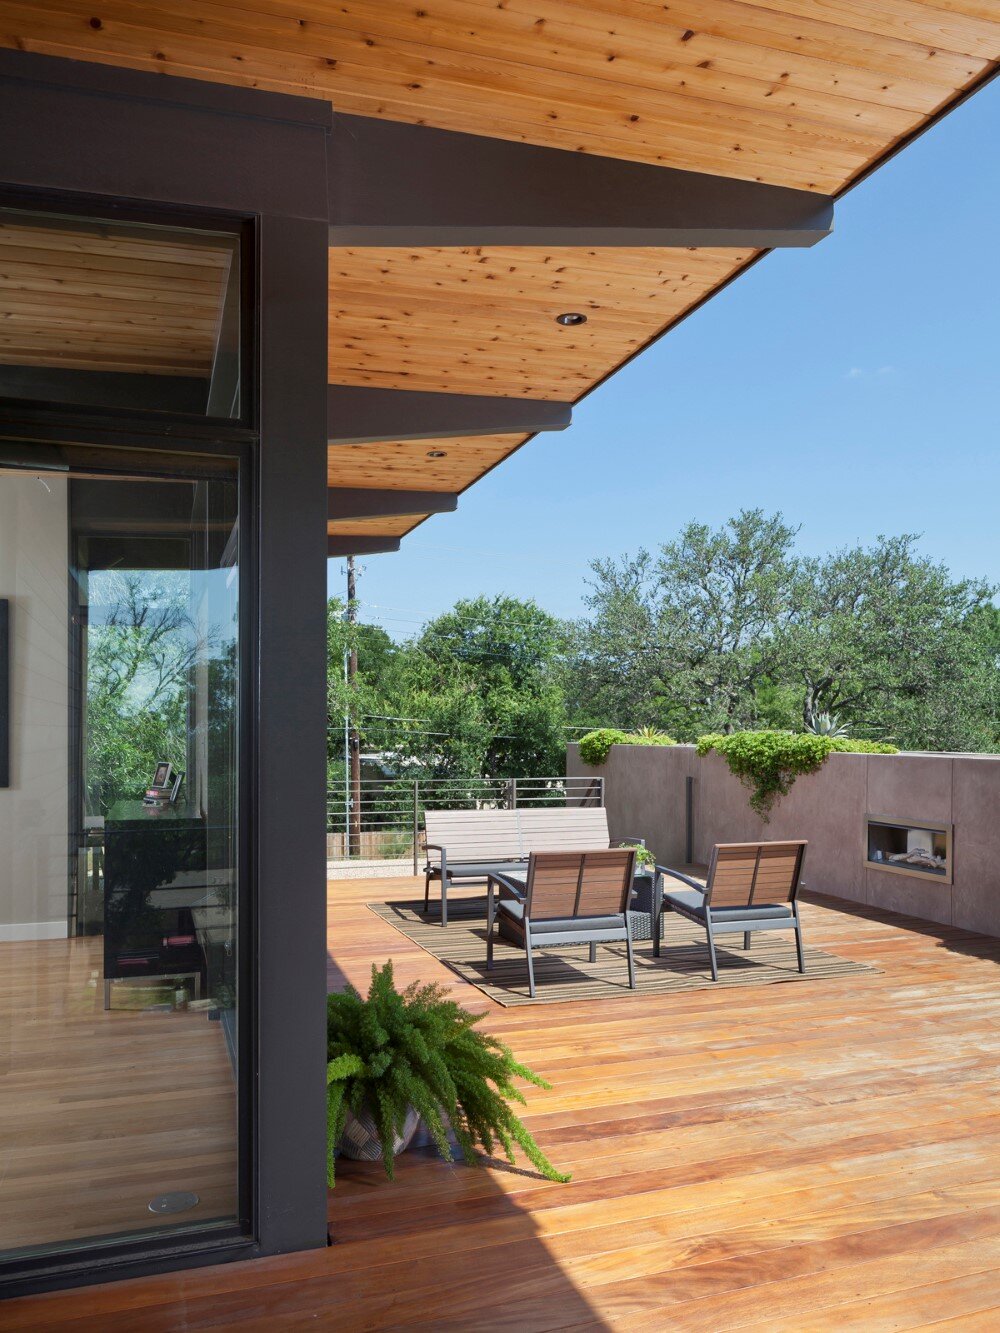 Modern architecture and spacious roof deck Barton Hills Residence - HomeWorldDesign (2) (Custom)